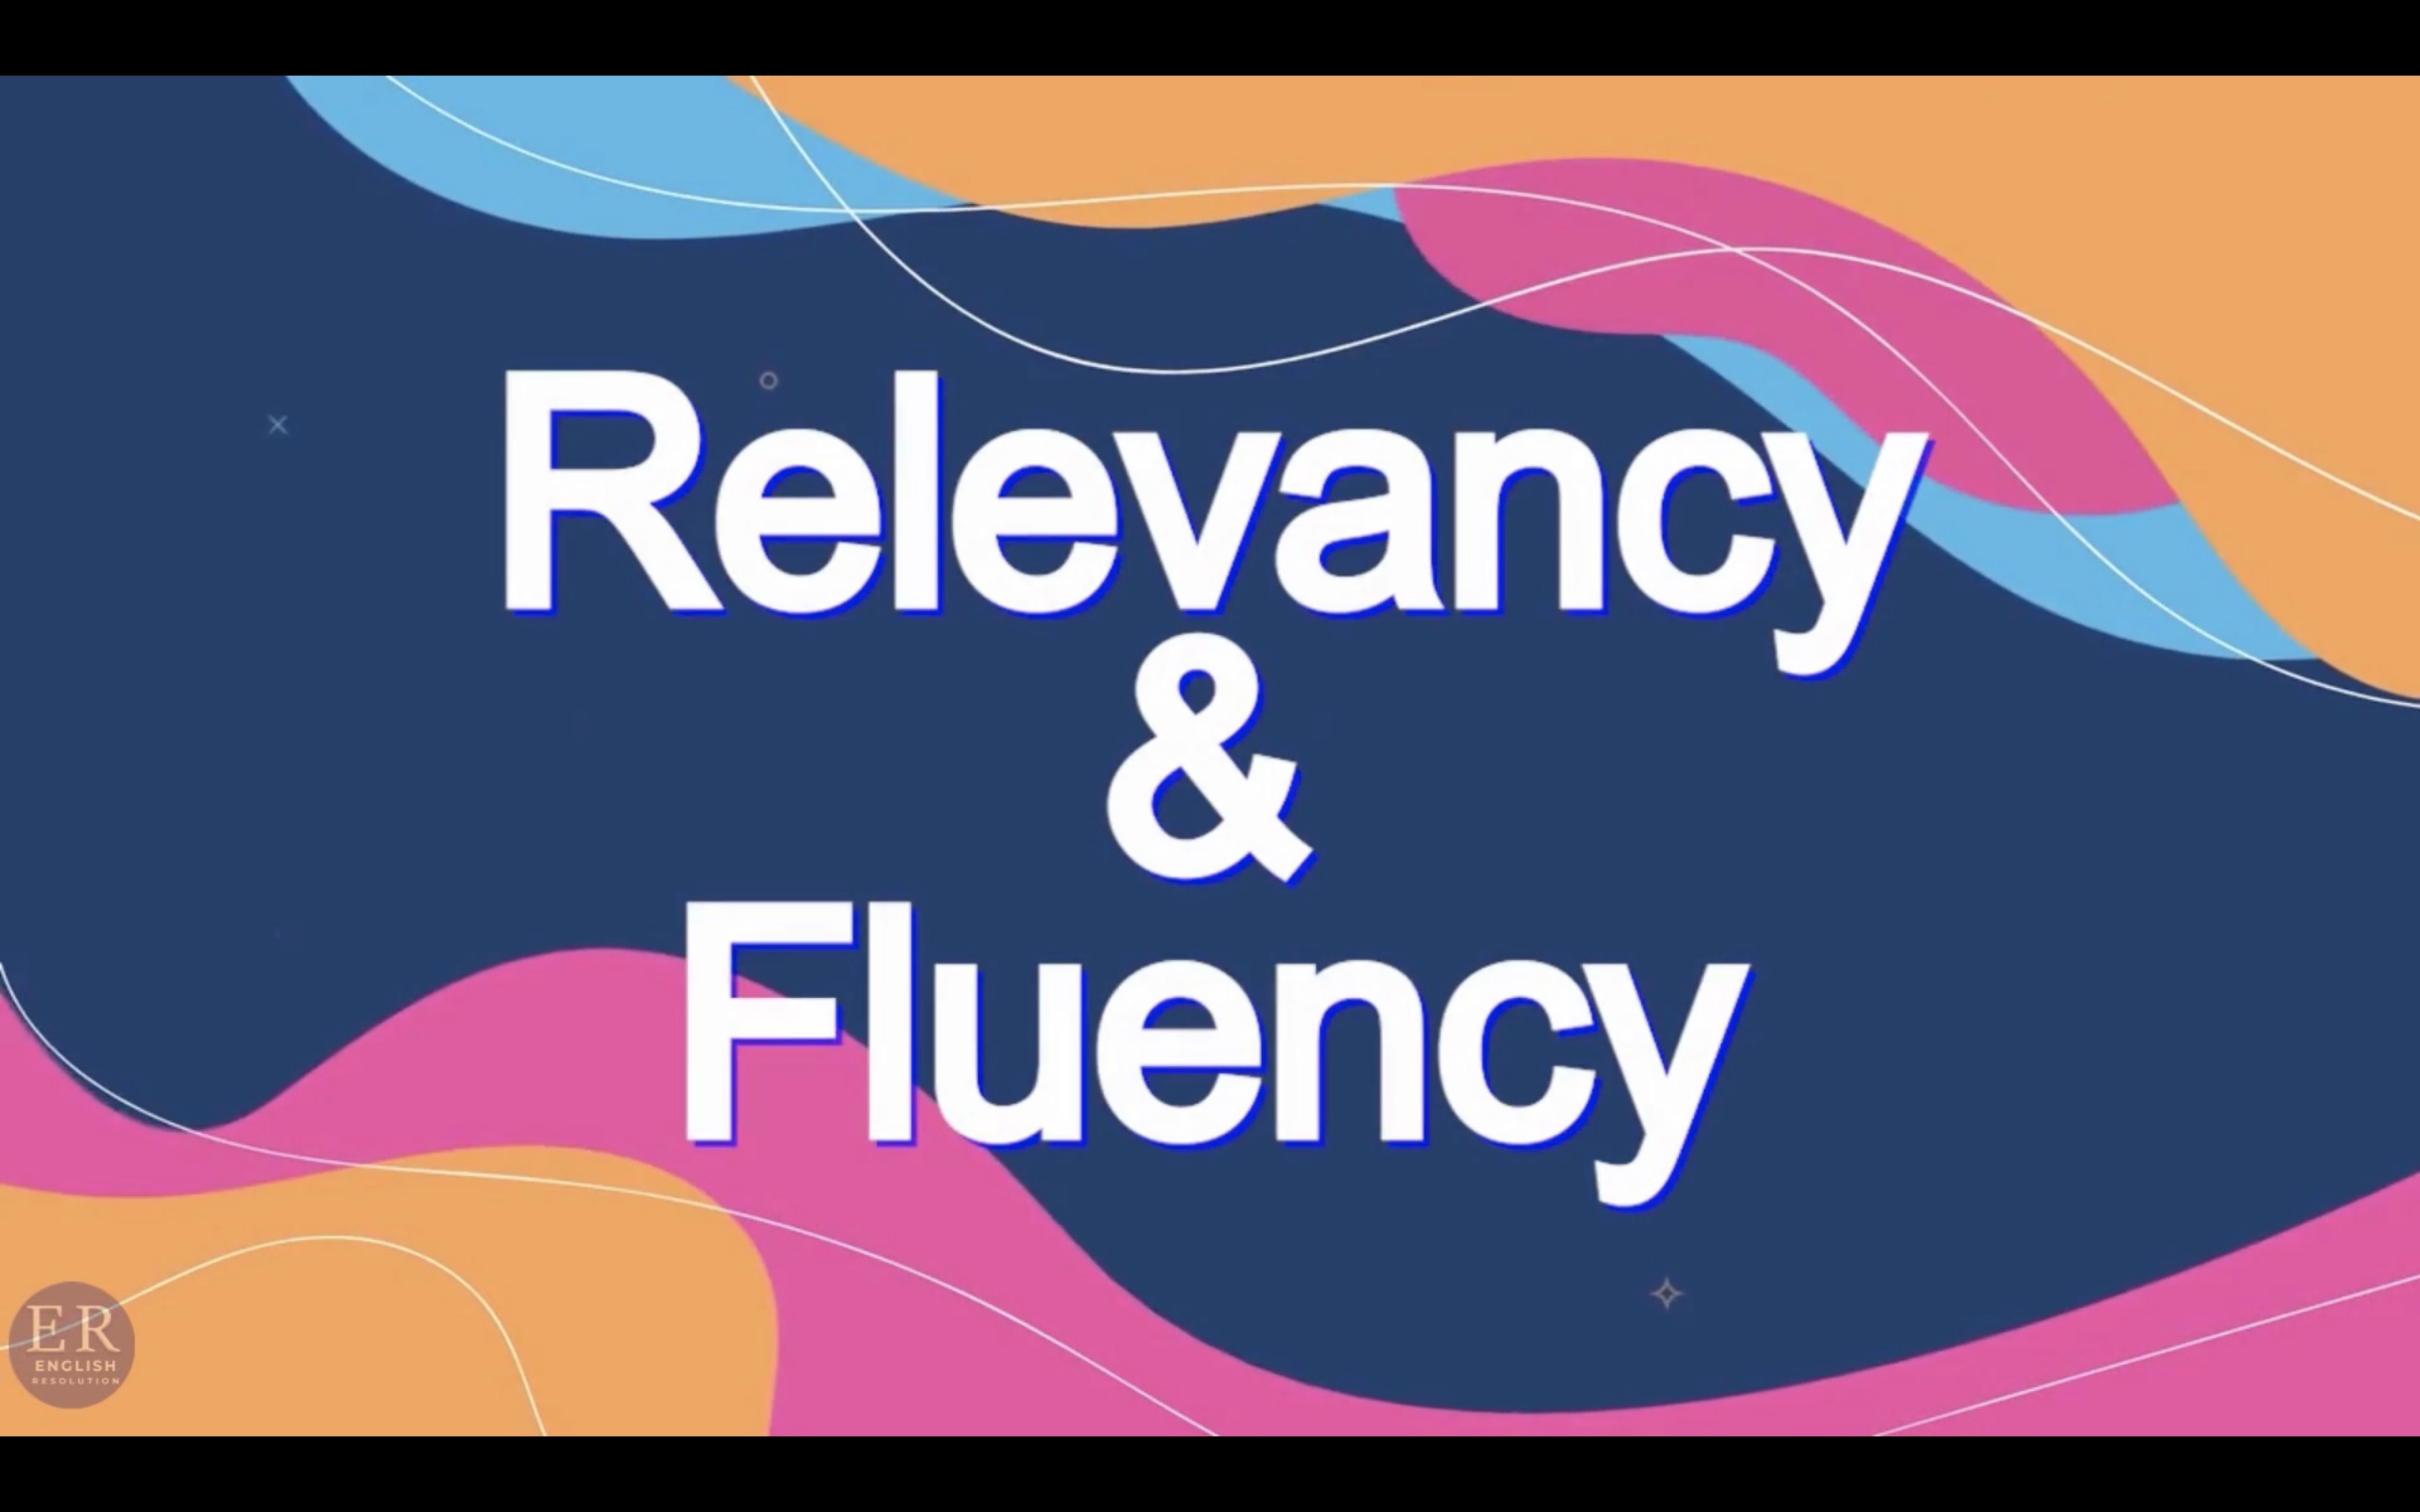 Key Elements: Relevancy & Fluency